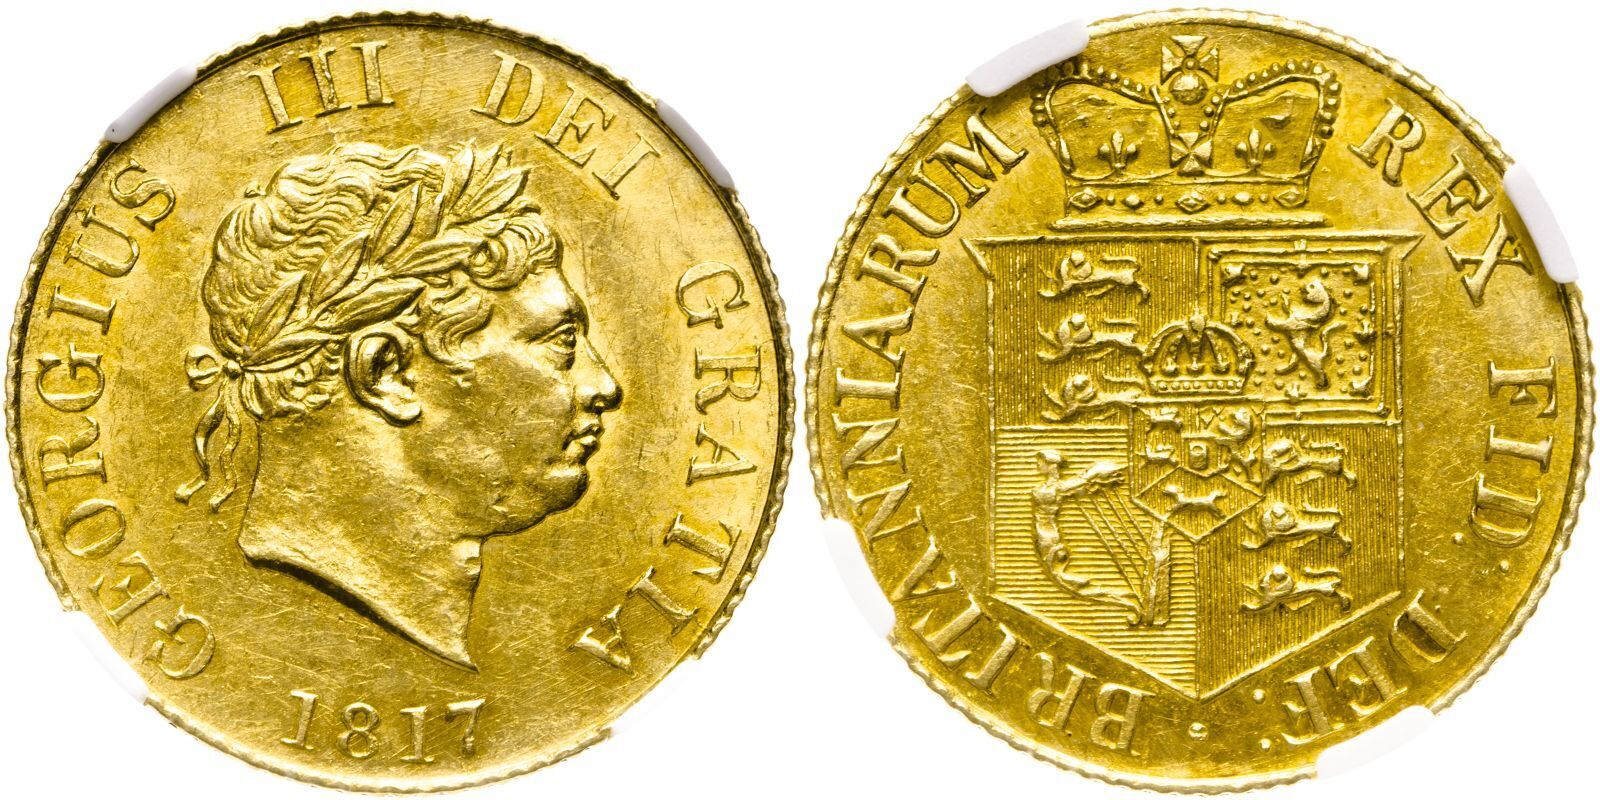 Lot 41 | United Kingdom, George III, 1817 Gold Half-Sovereign - NGC MS 61